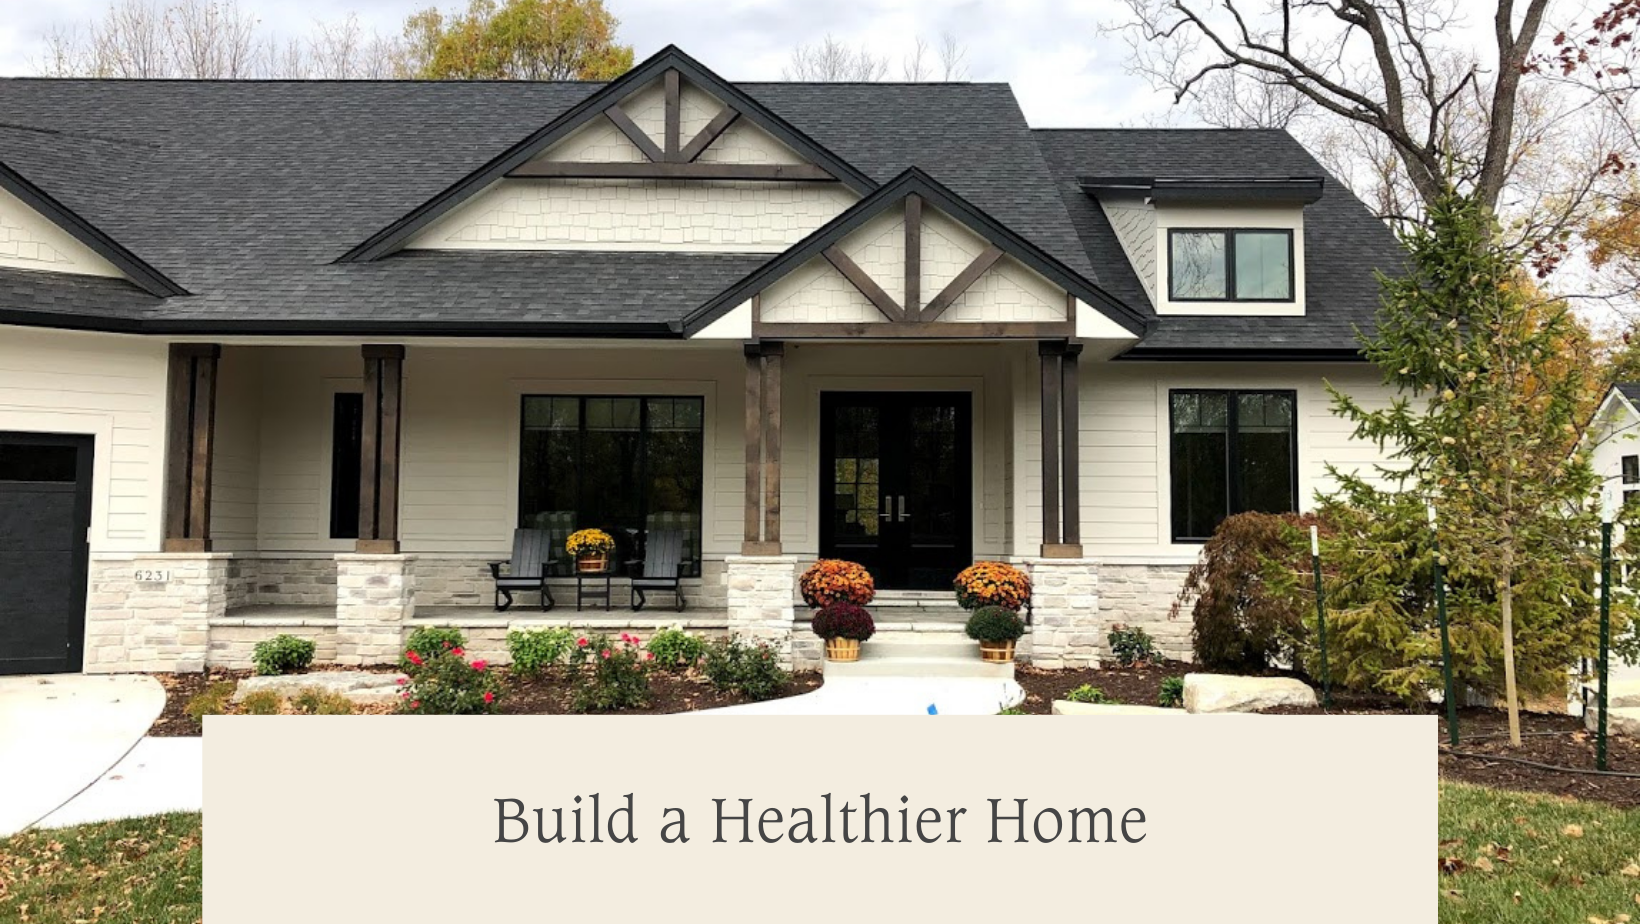 Build a Healthier Home